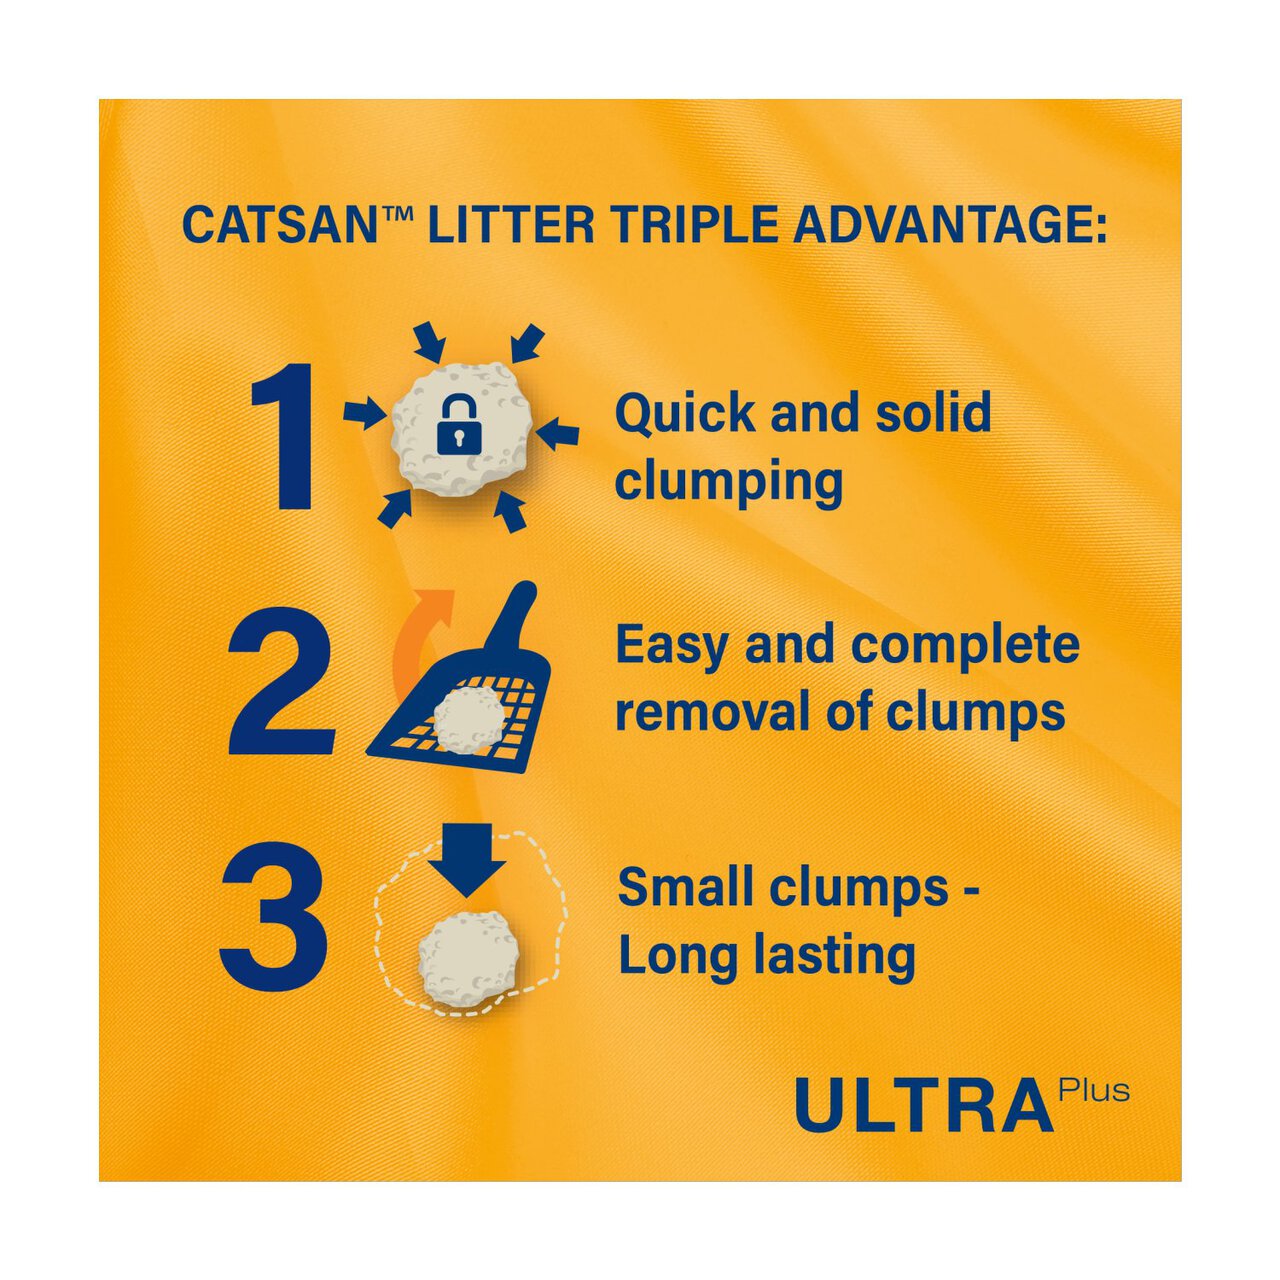 Catsan Ultra Clumping Odour Control Cat Litter 5l